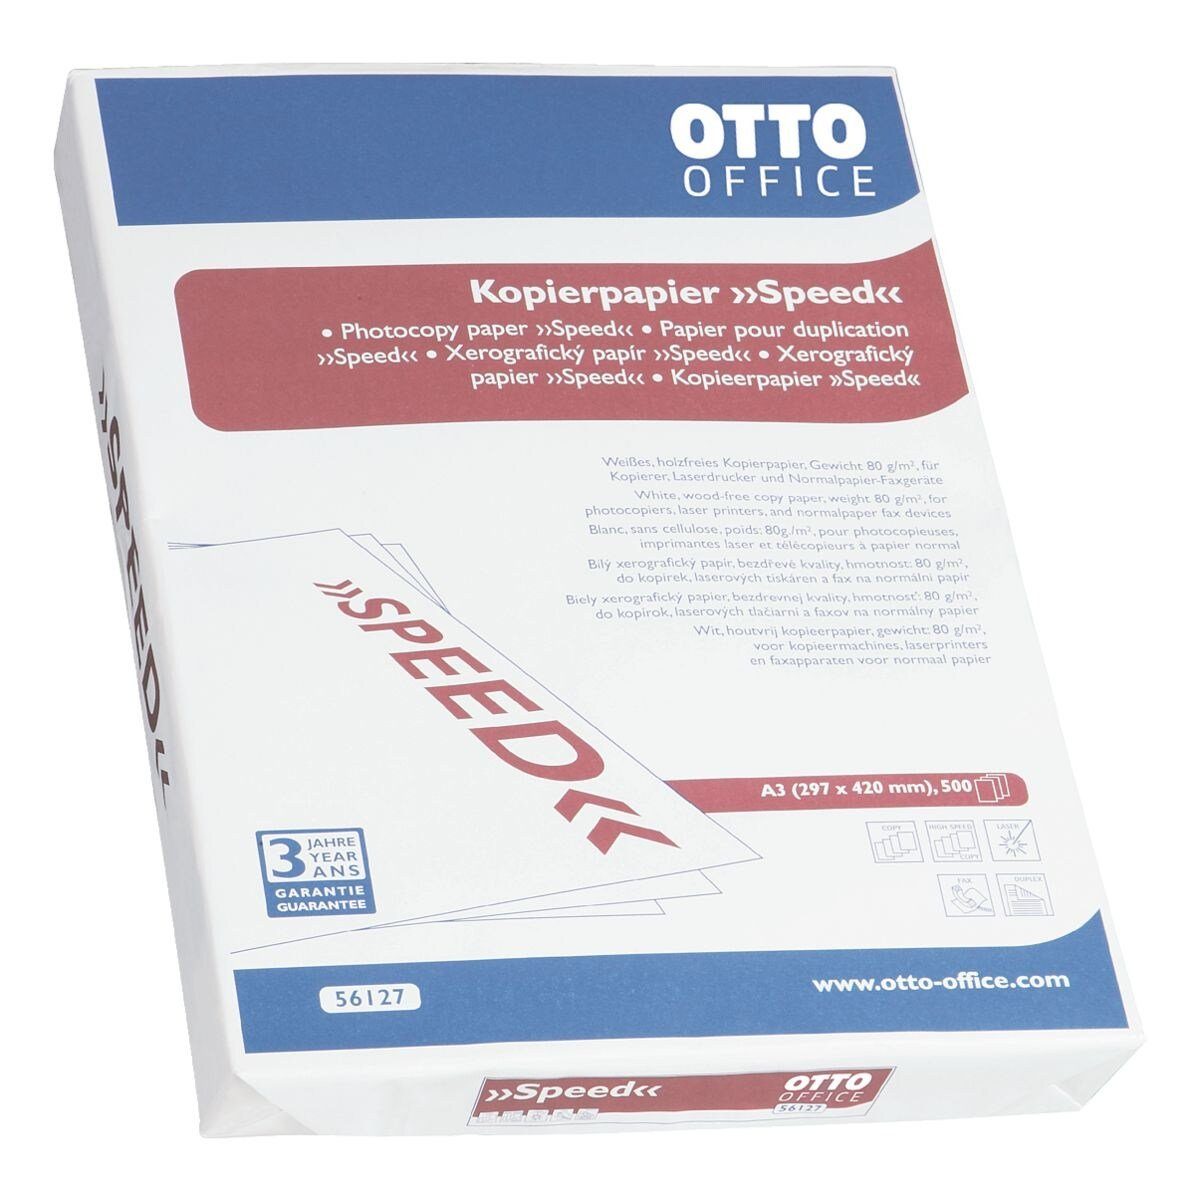 g/m², 150 80 Format Office Otto Druckerpapier CIE, Blatt DIN 500 SPEED, Office A3,